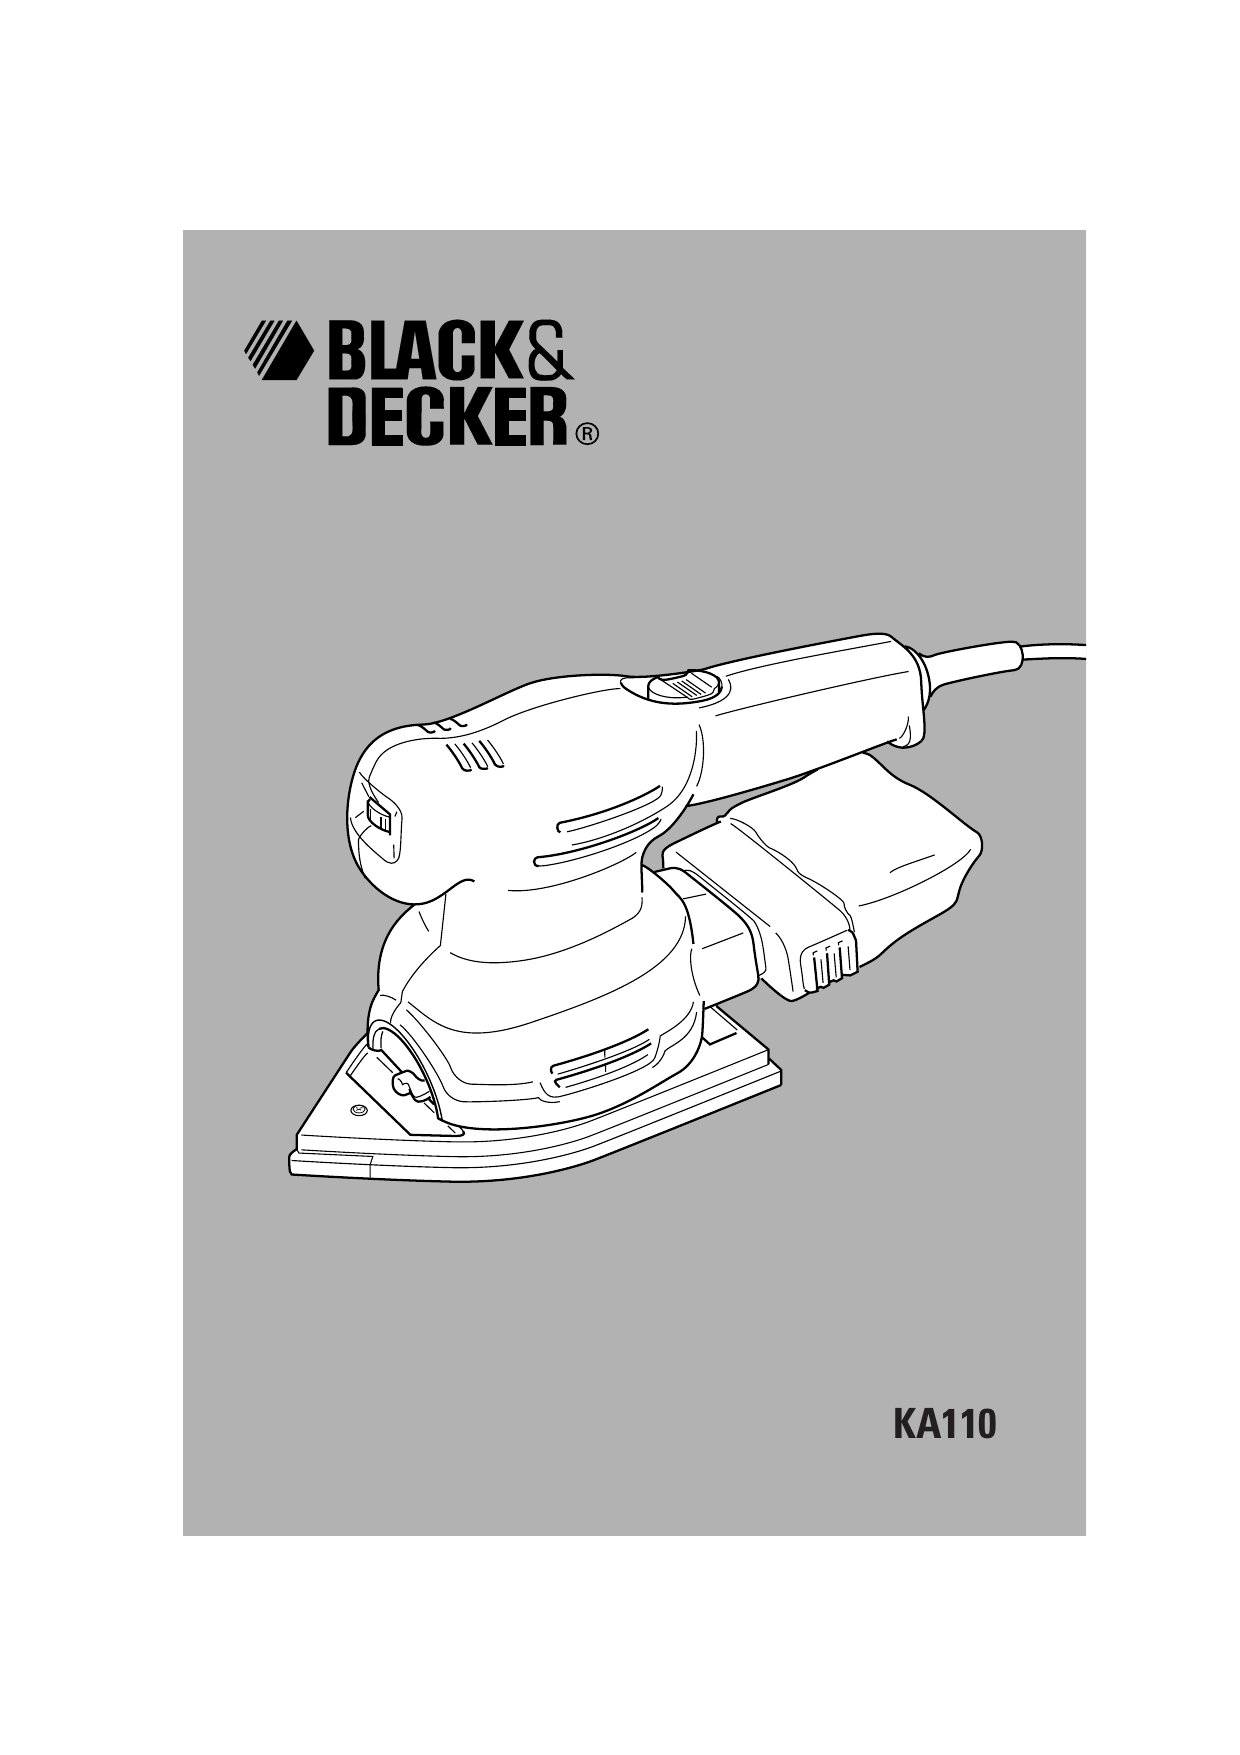 Image of Black & Decker KA274EK orbital sander at Black & Decker Direct